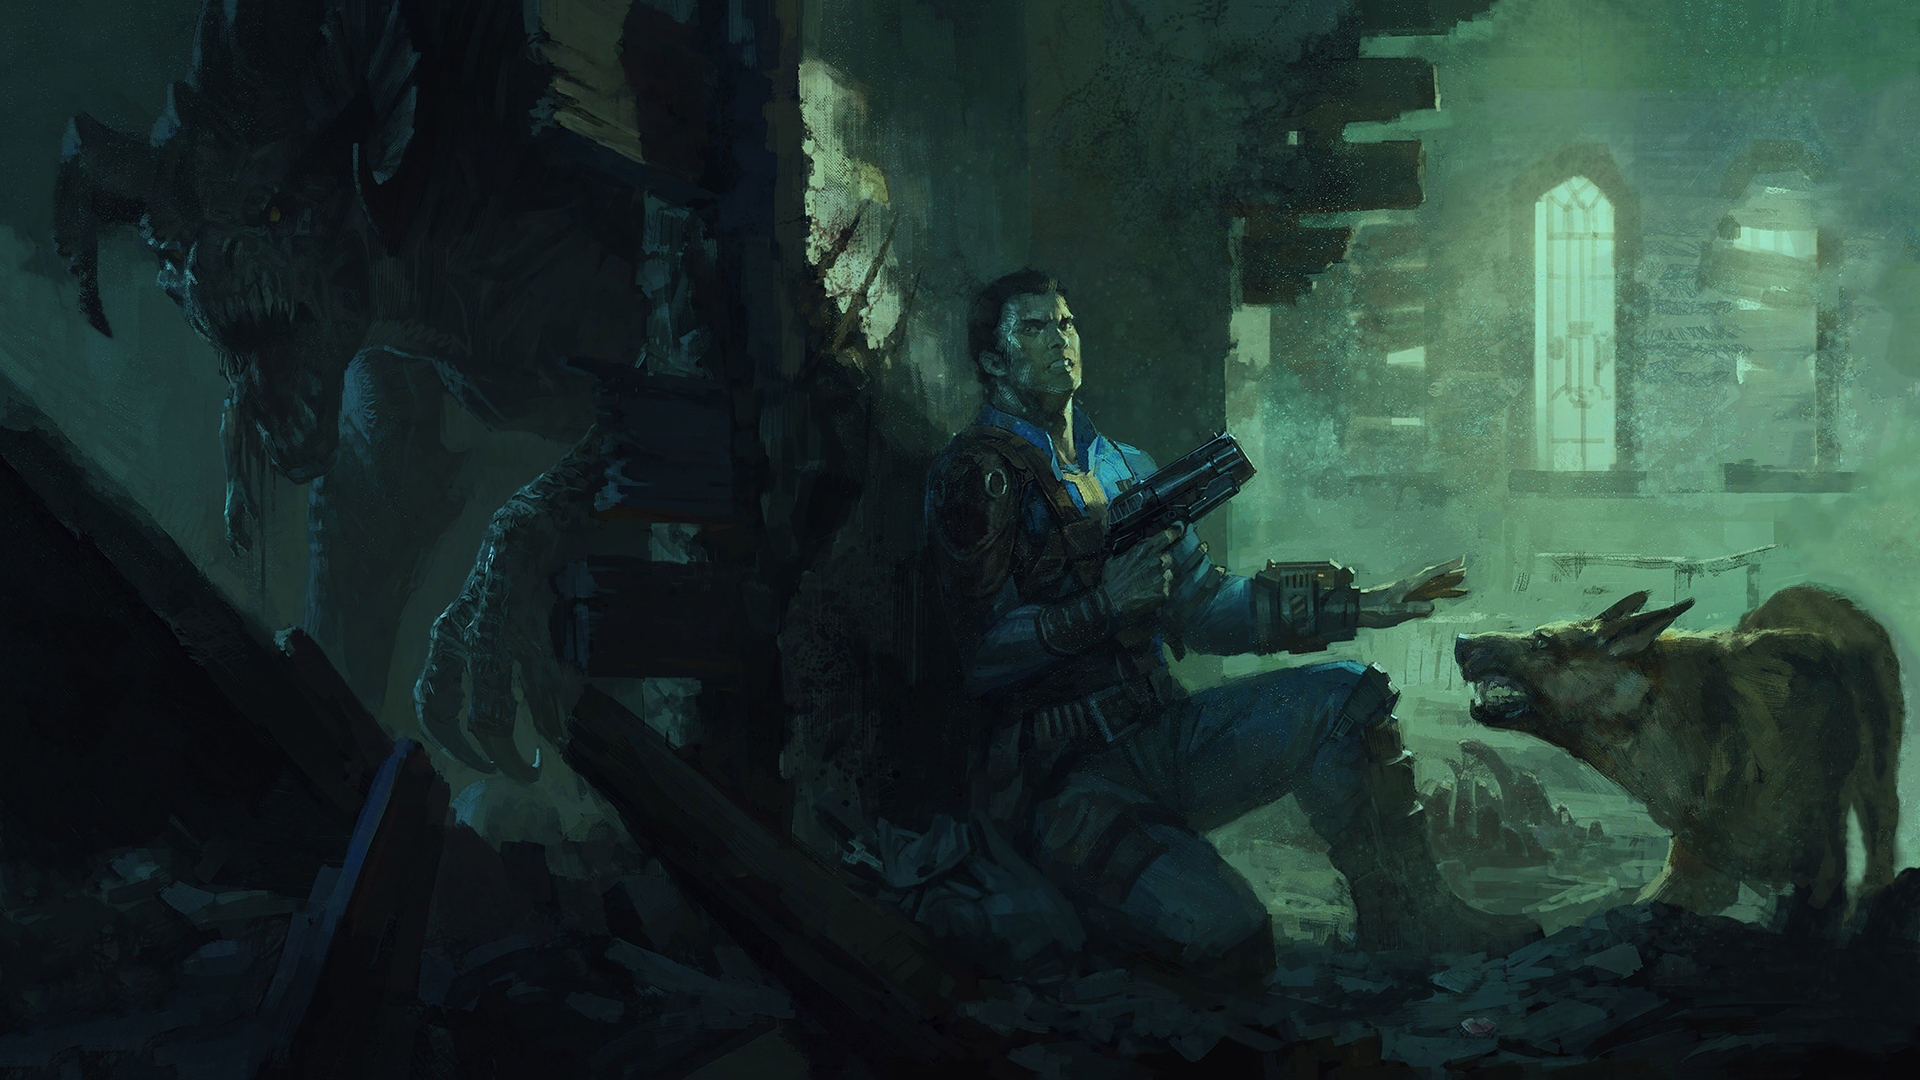 Bayard Wu Fallout 4 Deathclaw Gun Fantasy Art Creature Video Games 1920x1080